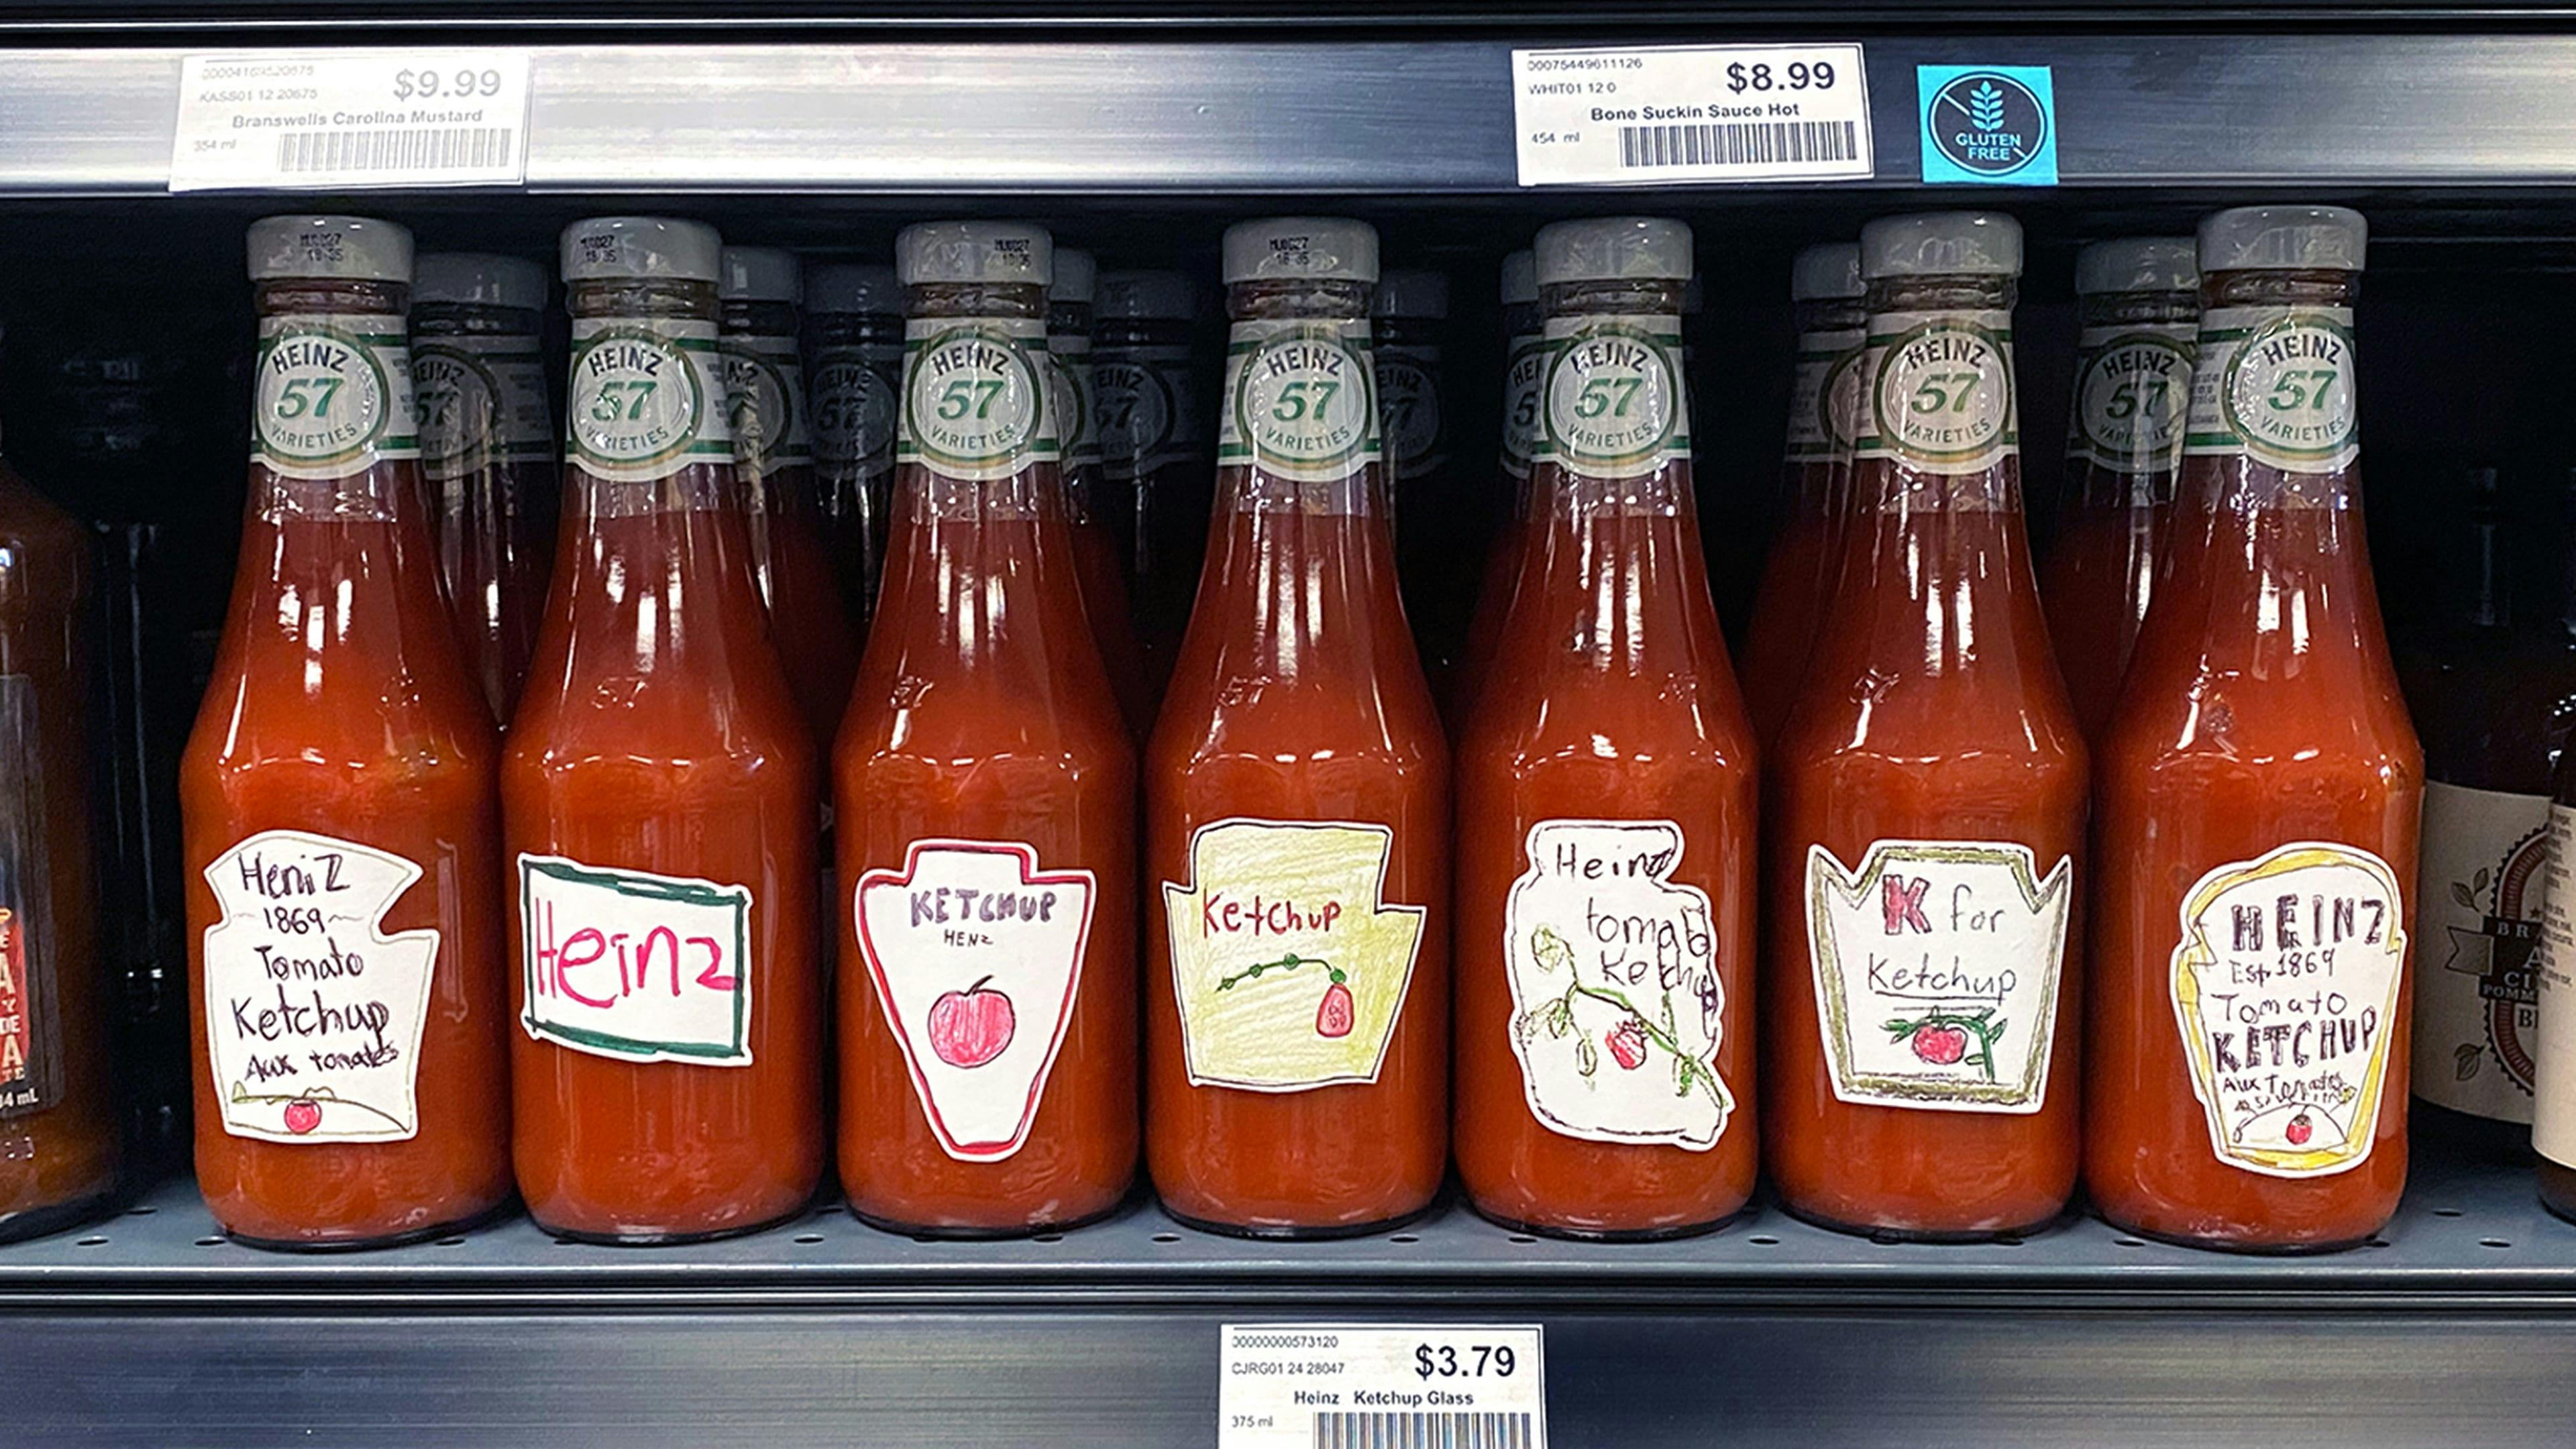 Heinz ketchup bottles on the shelf.